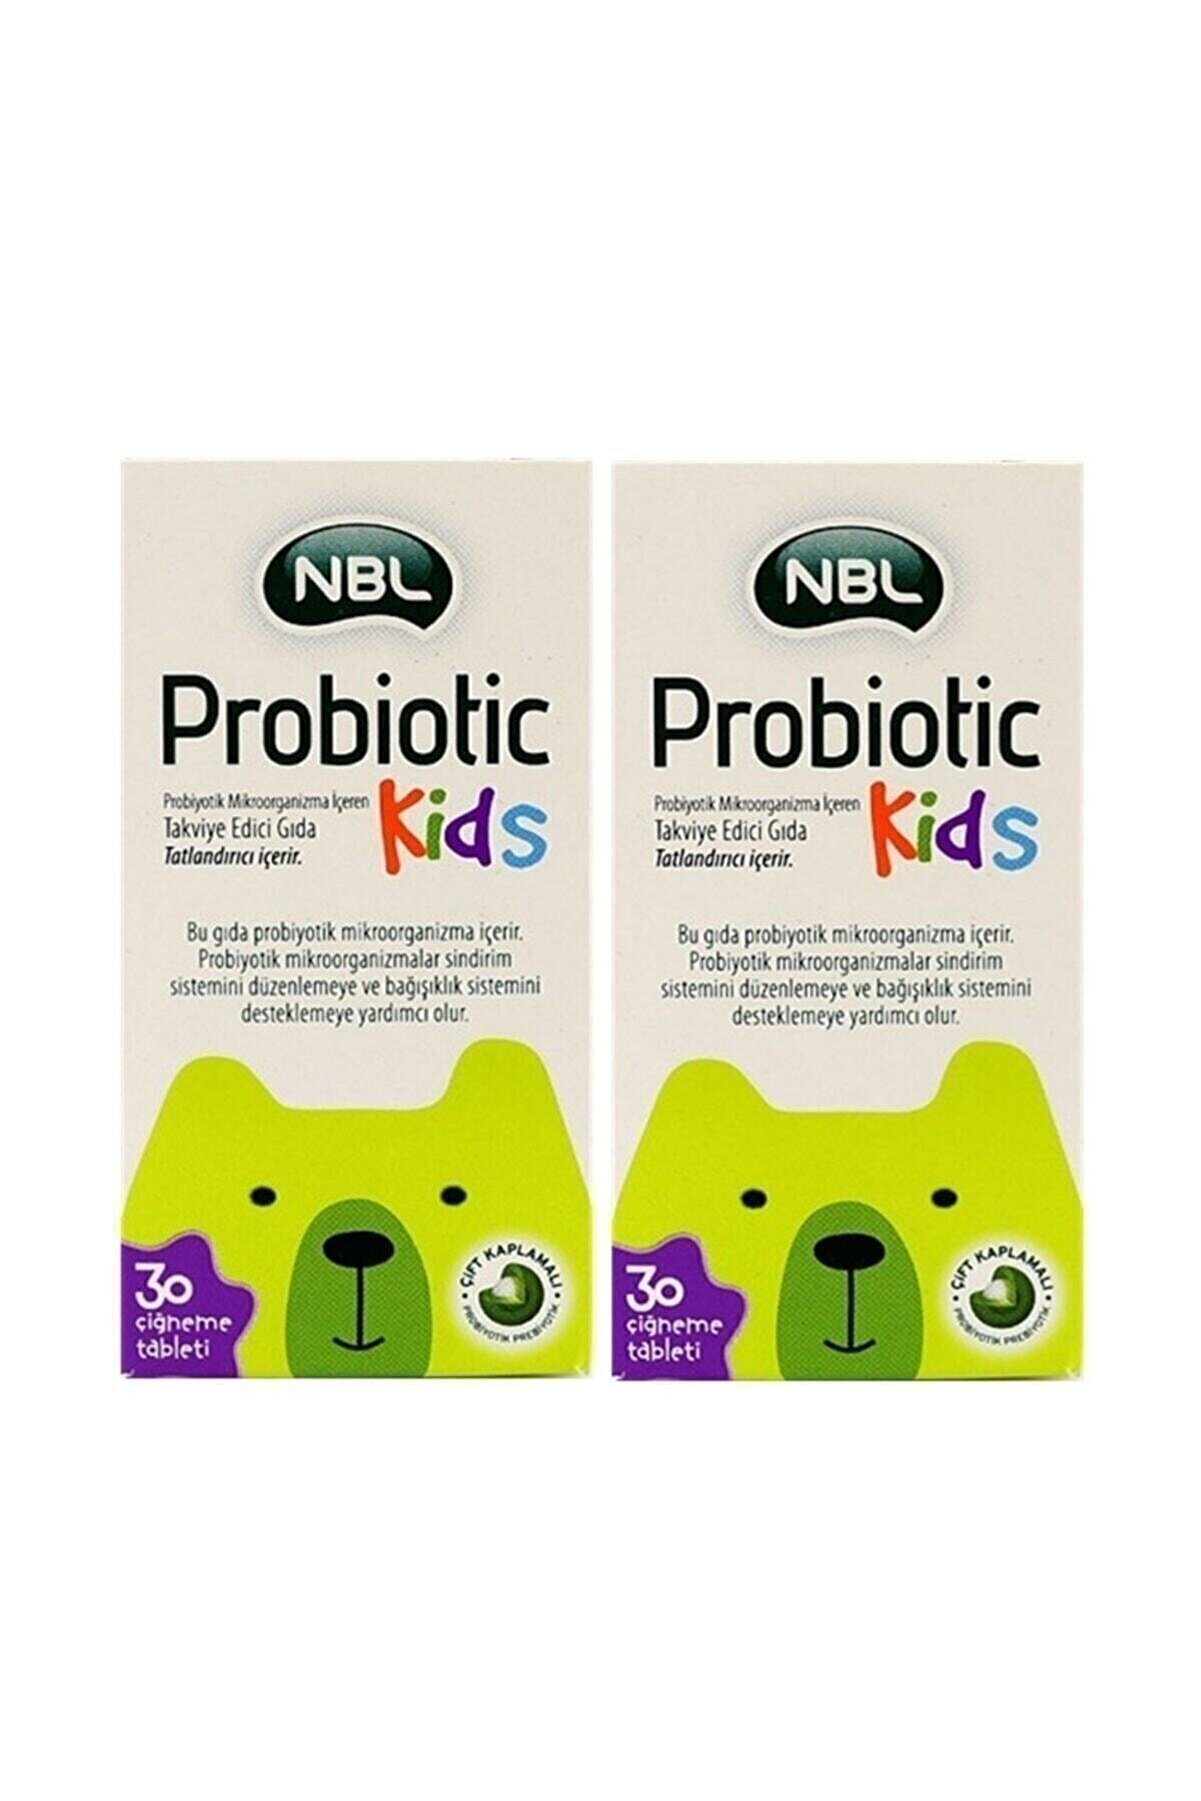 NBL Probiotic Kids 30 Çiğneme Tableti-2 Adet-